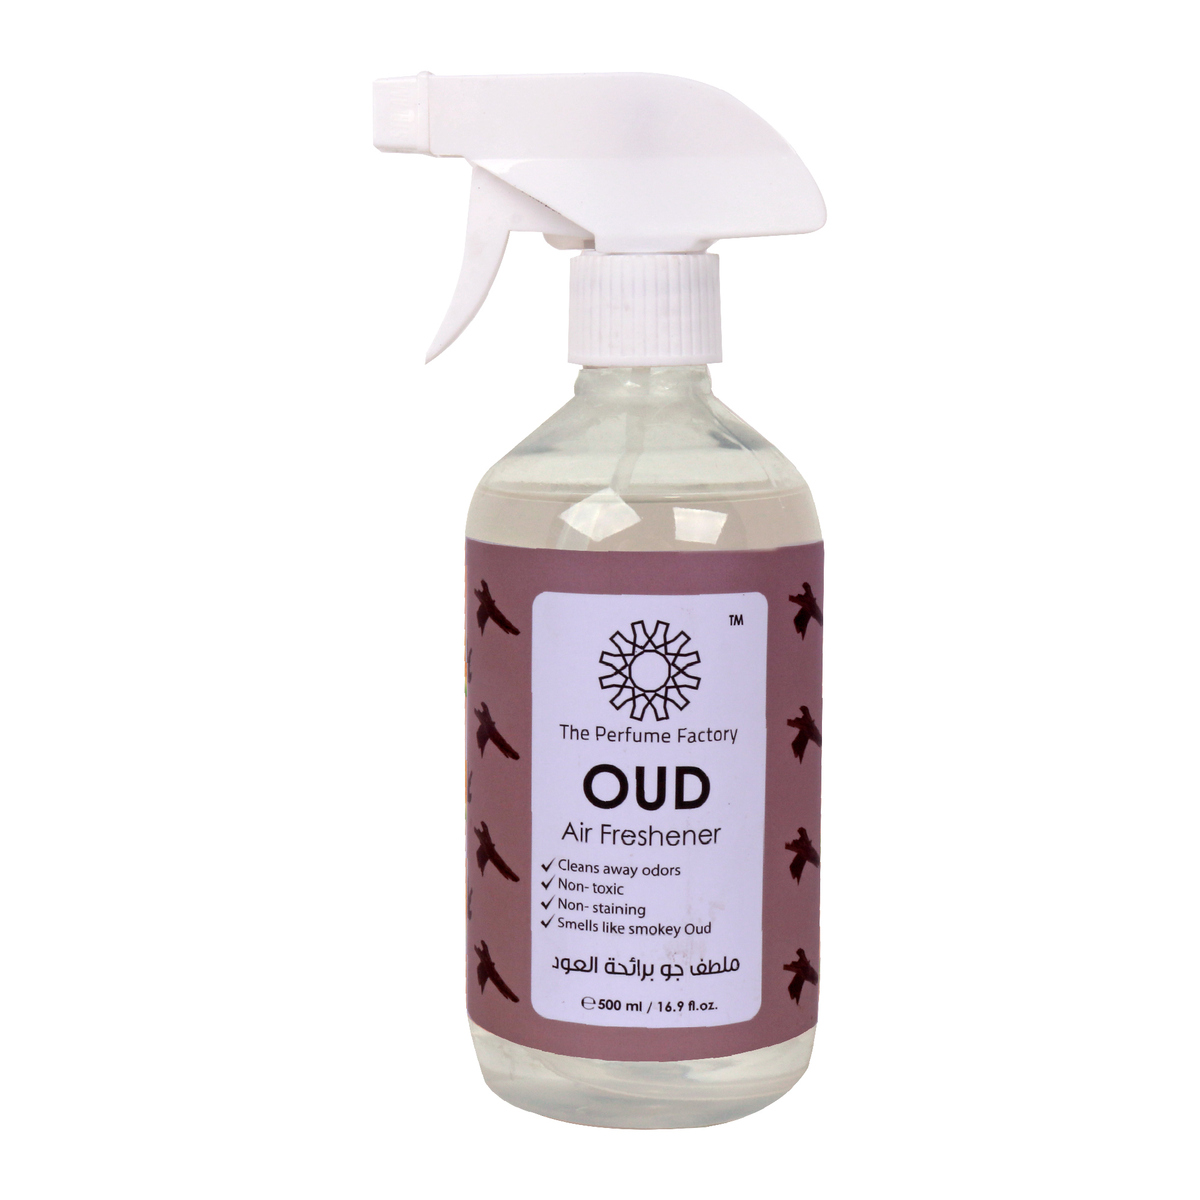 The Perfume Factory Air Freshener Oud 500ml